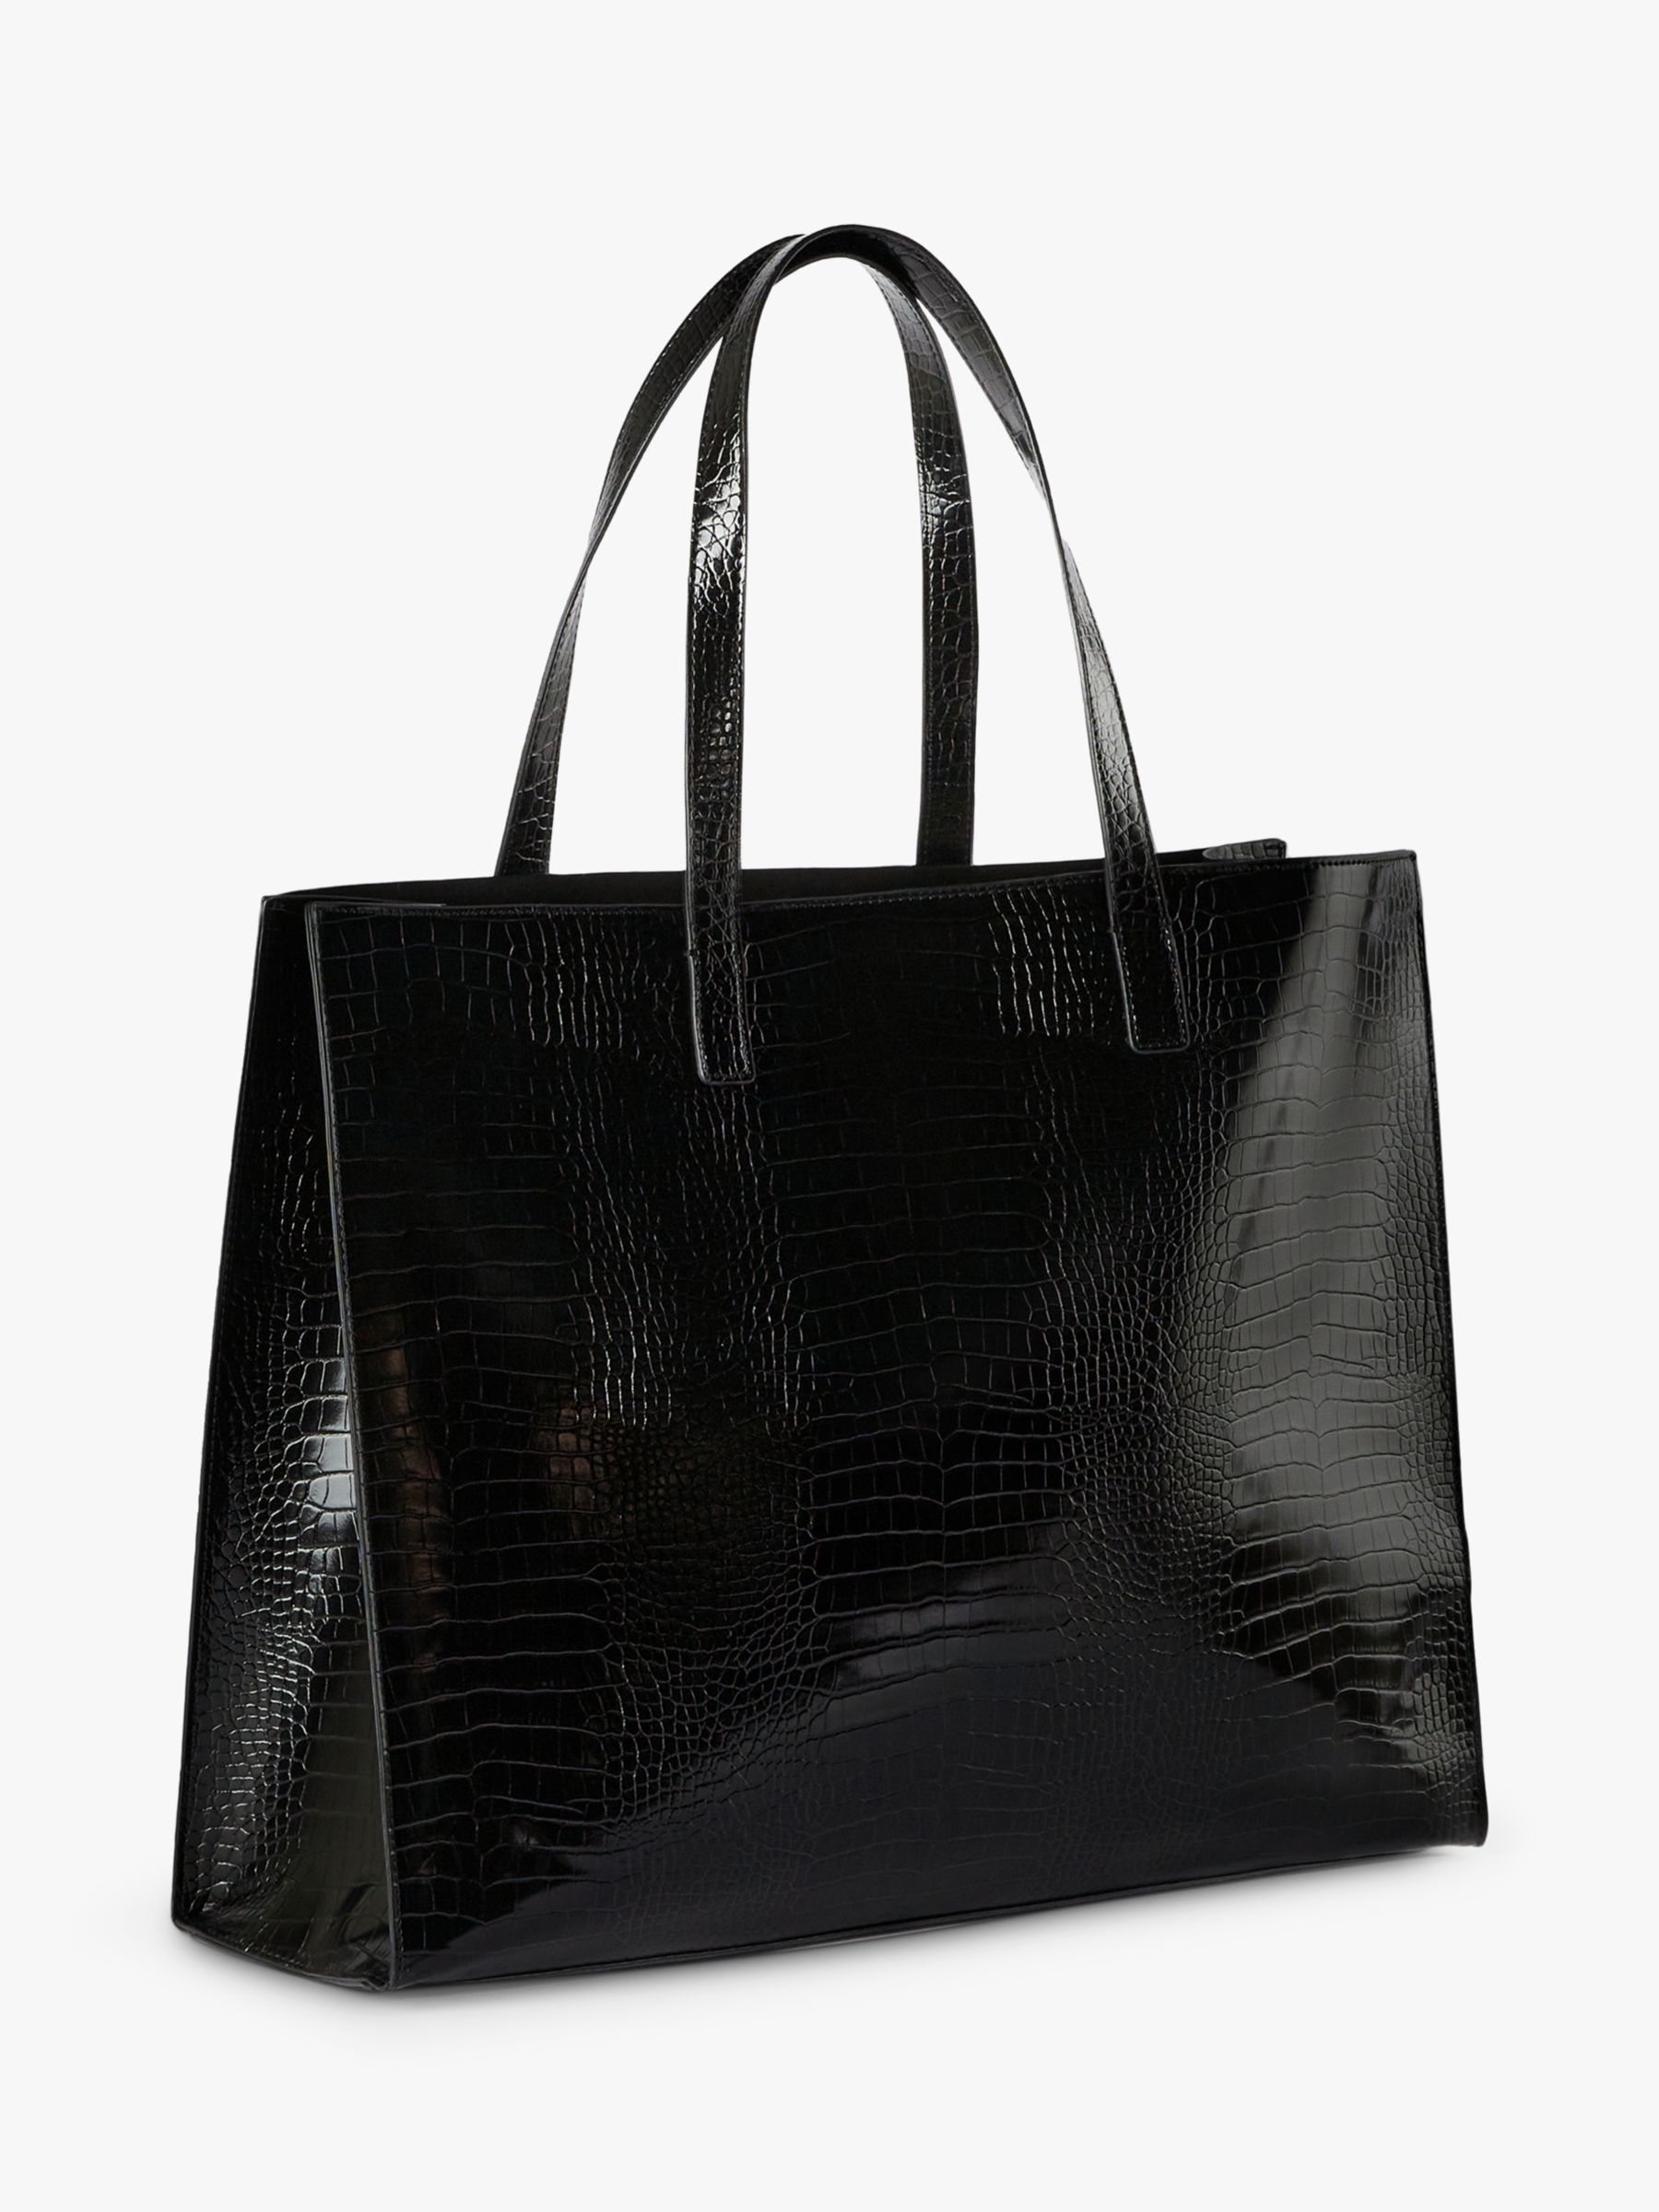 Ted Baker Allicon Croc Large Icon Shopper Bag, Black, One Size